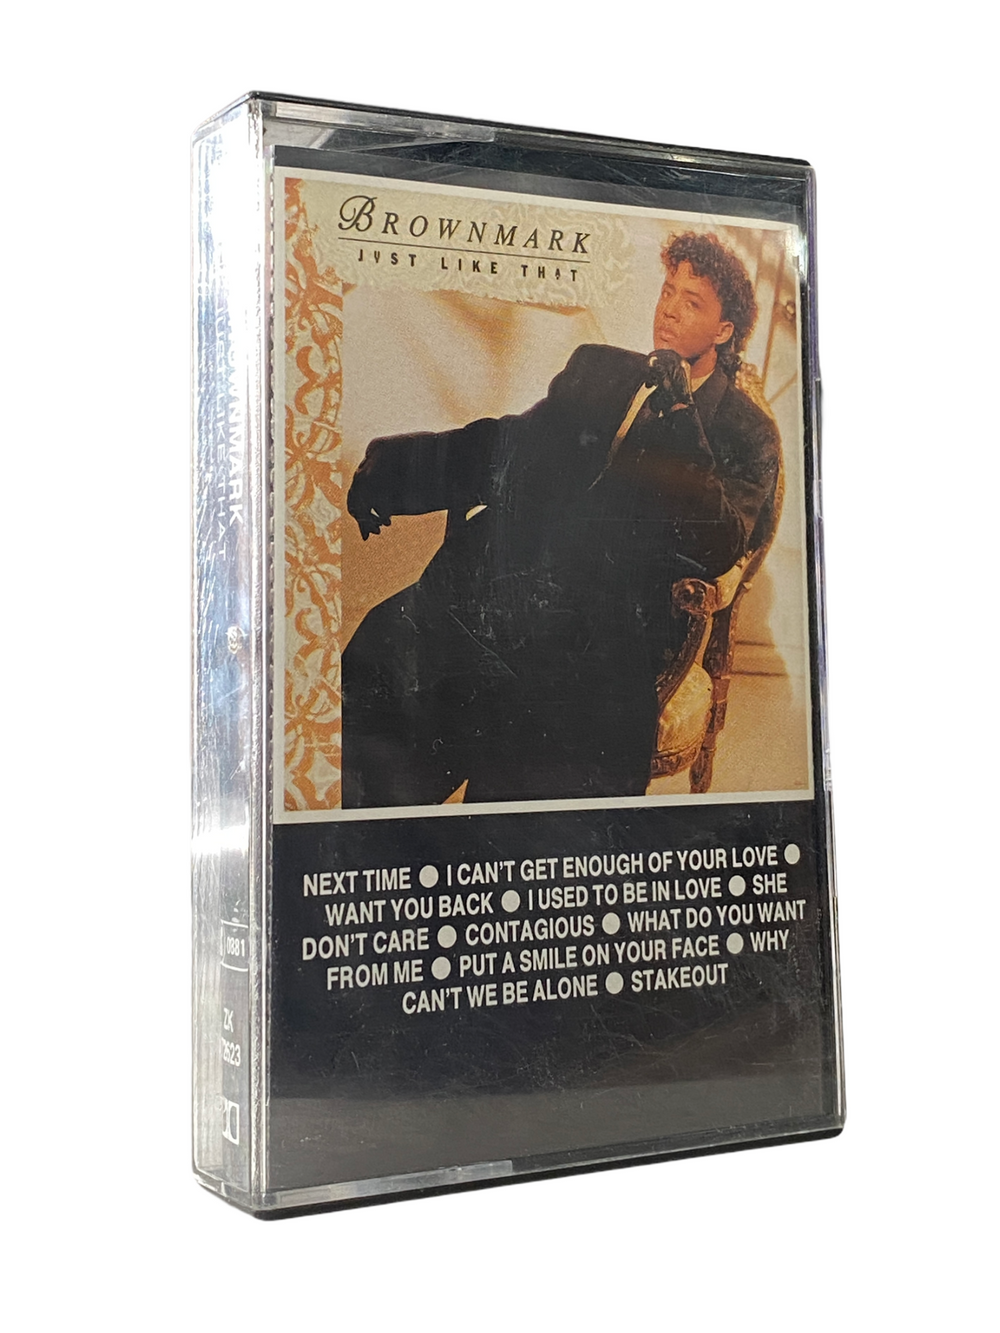 Prince – Brownmark Just Like That Original Cassette Tape 1987 UK EU Release Prince